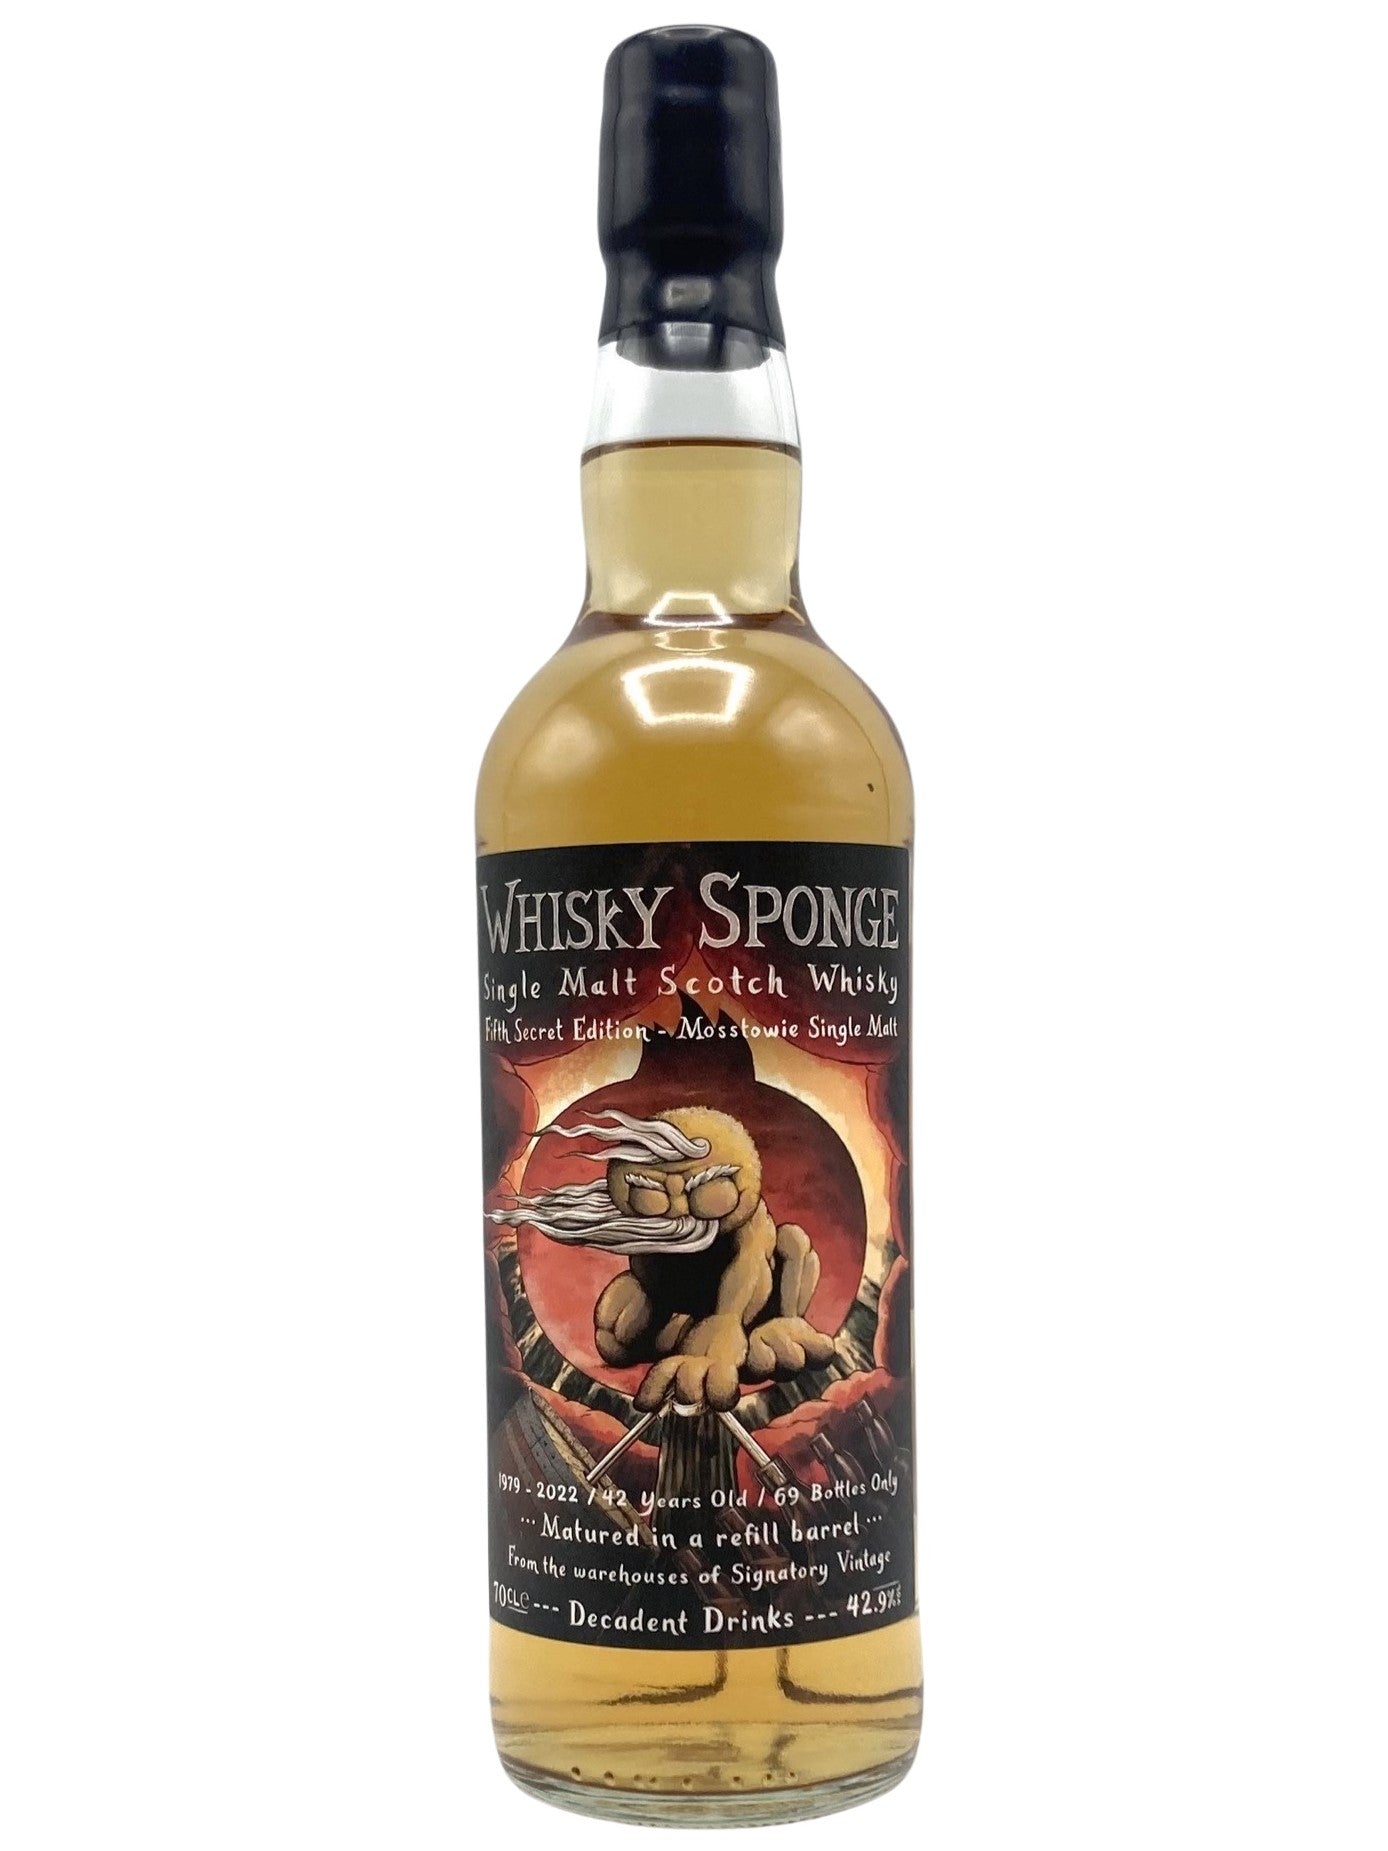 Whisky Sponge Mosstowie 1979